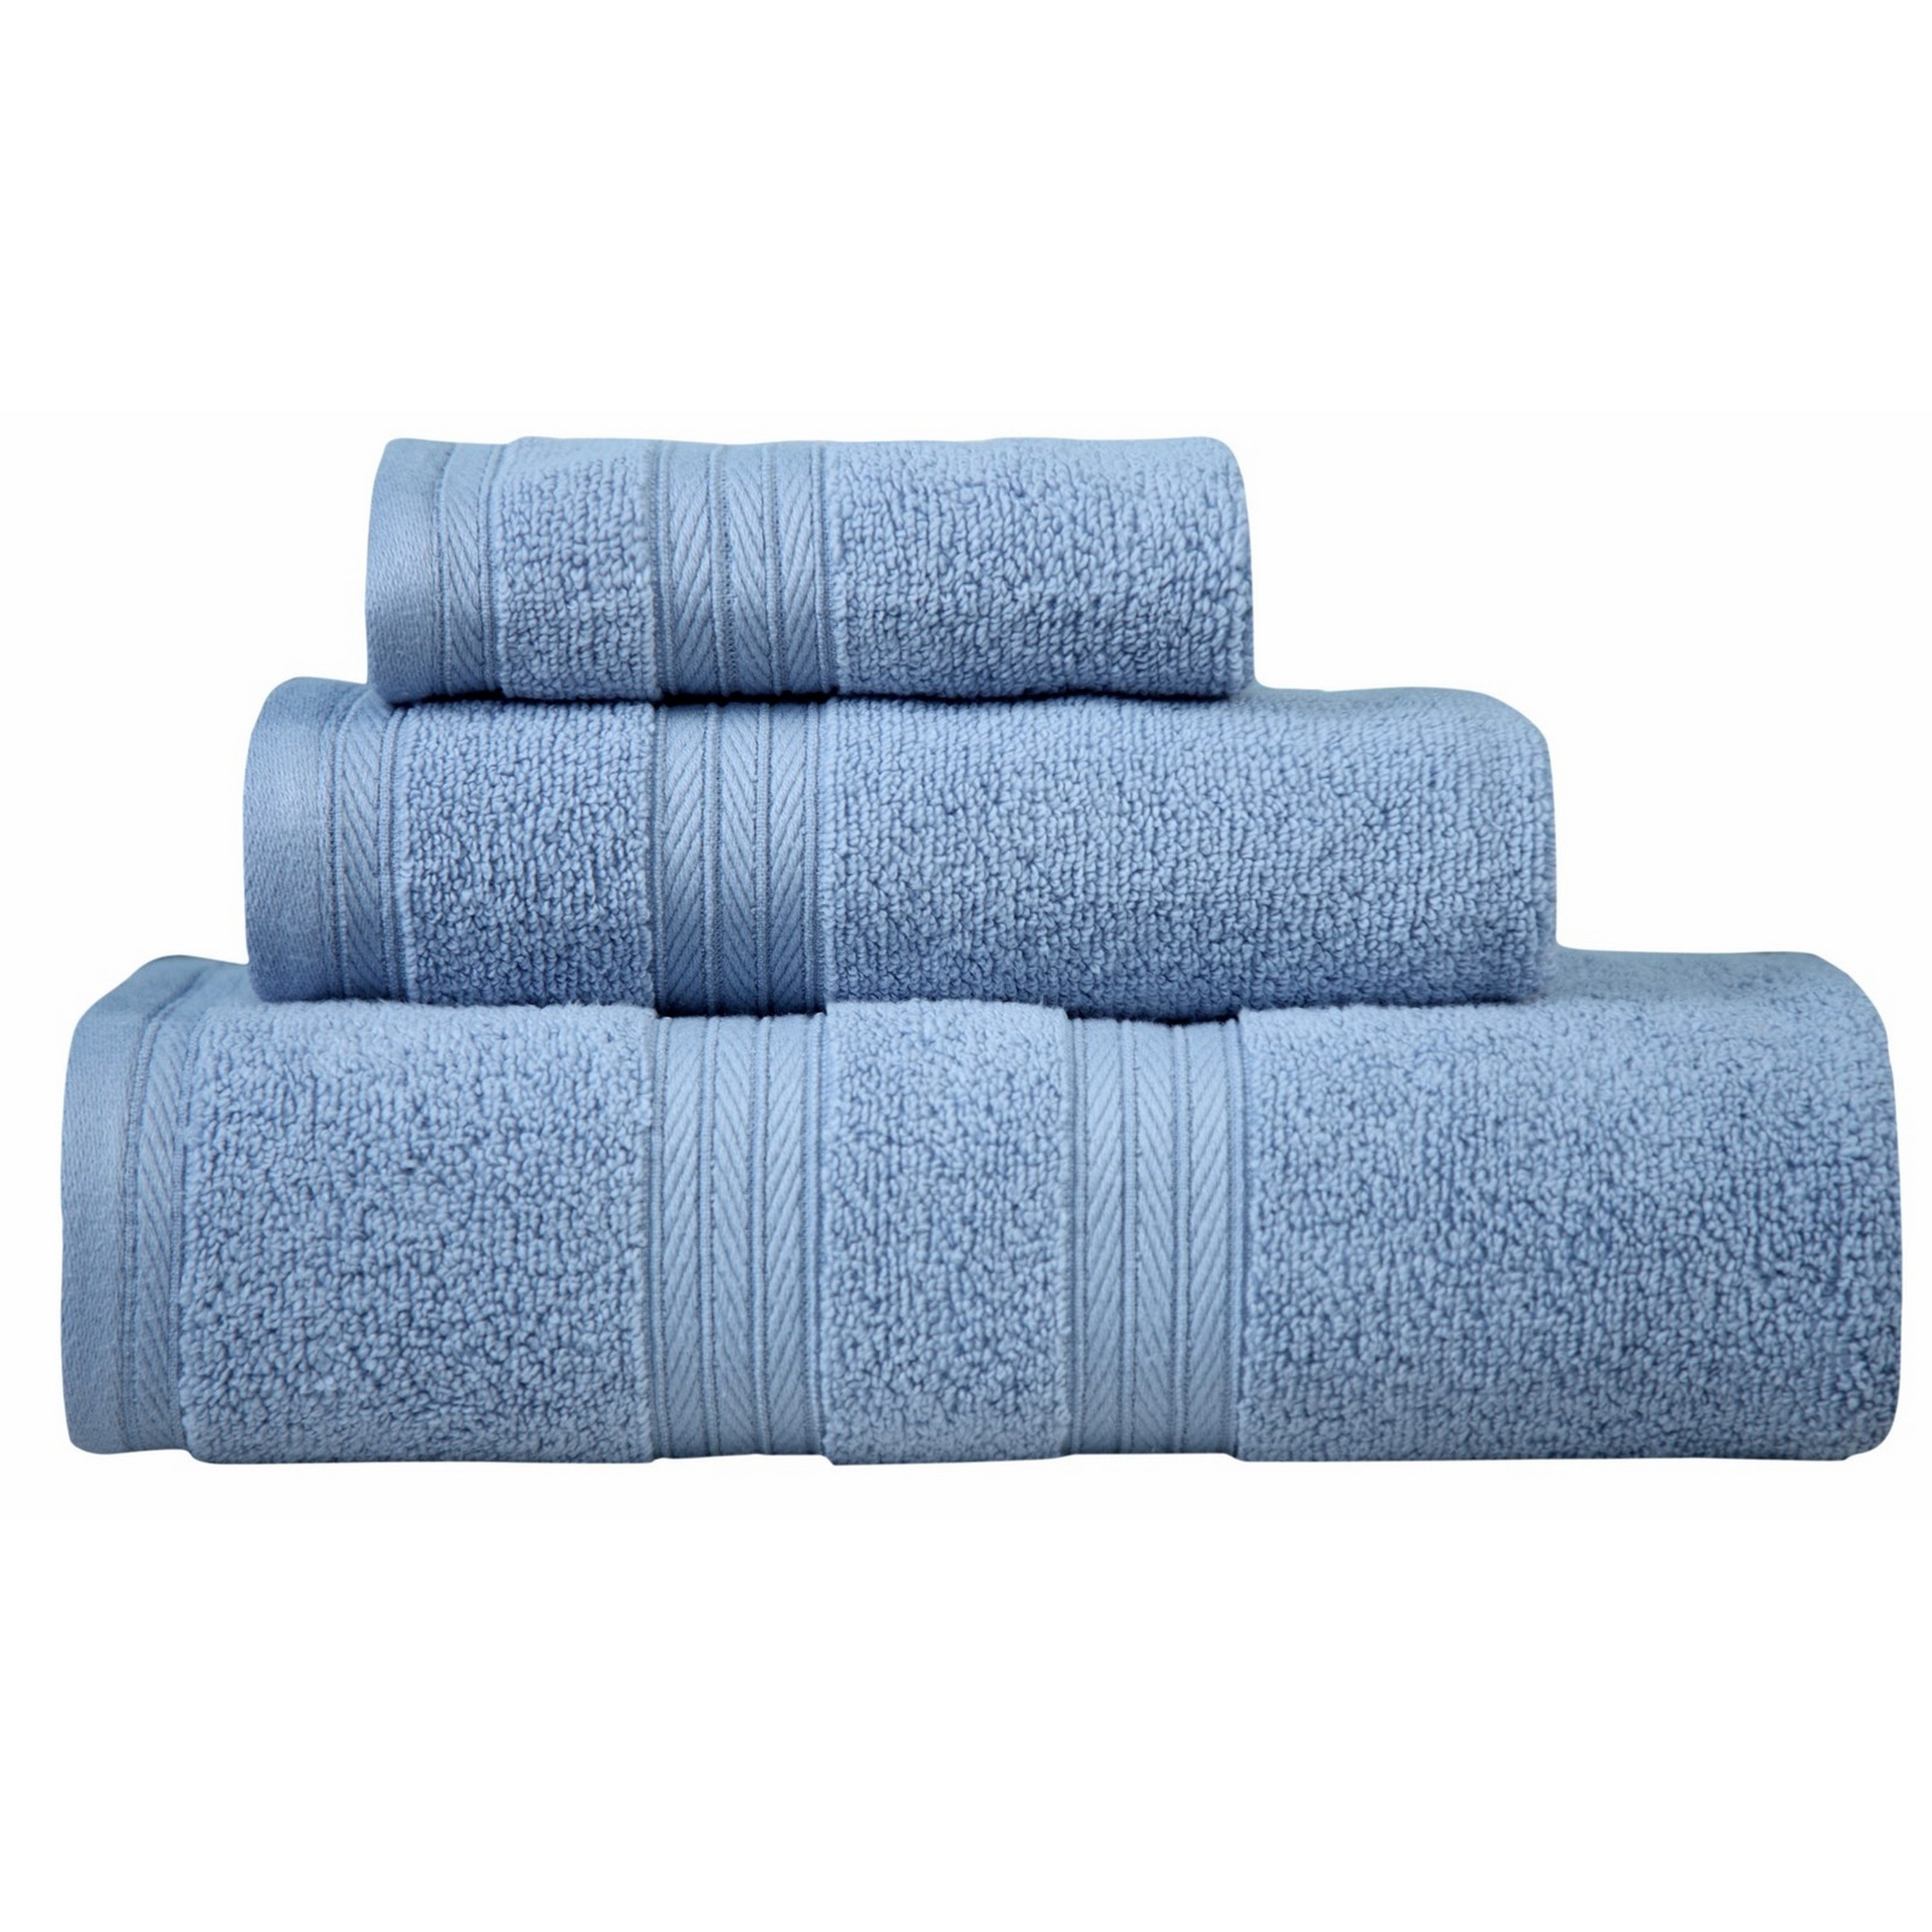 https://ak1.ostkcdn.com/images/products/is/images/direct/6cb750d78749ae28b8bcb60af2850abd744be1d1/Waterford-Towel-Set-of-3%2C-100%25-Premium-Cotton-%26-Luxury-Sets%2C-1-Bath-Towel-27%22x54%22%2C-1-Hand-Towel-16%22x28%22-%26-1-Washcloth-13%22x13%22.jpg